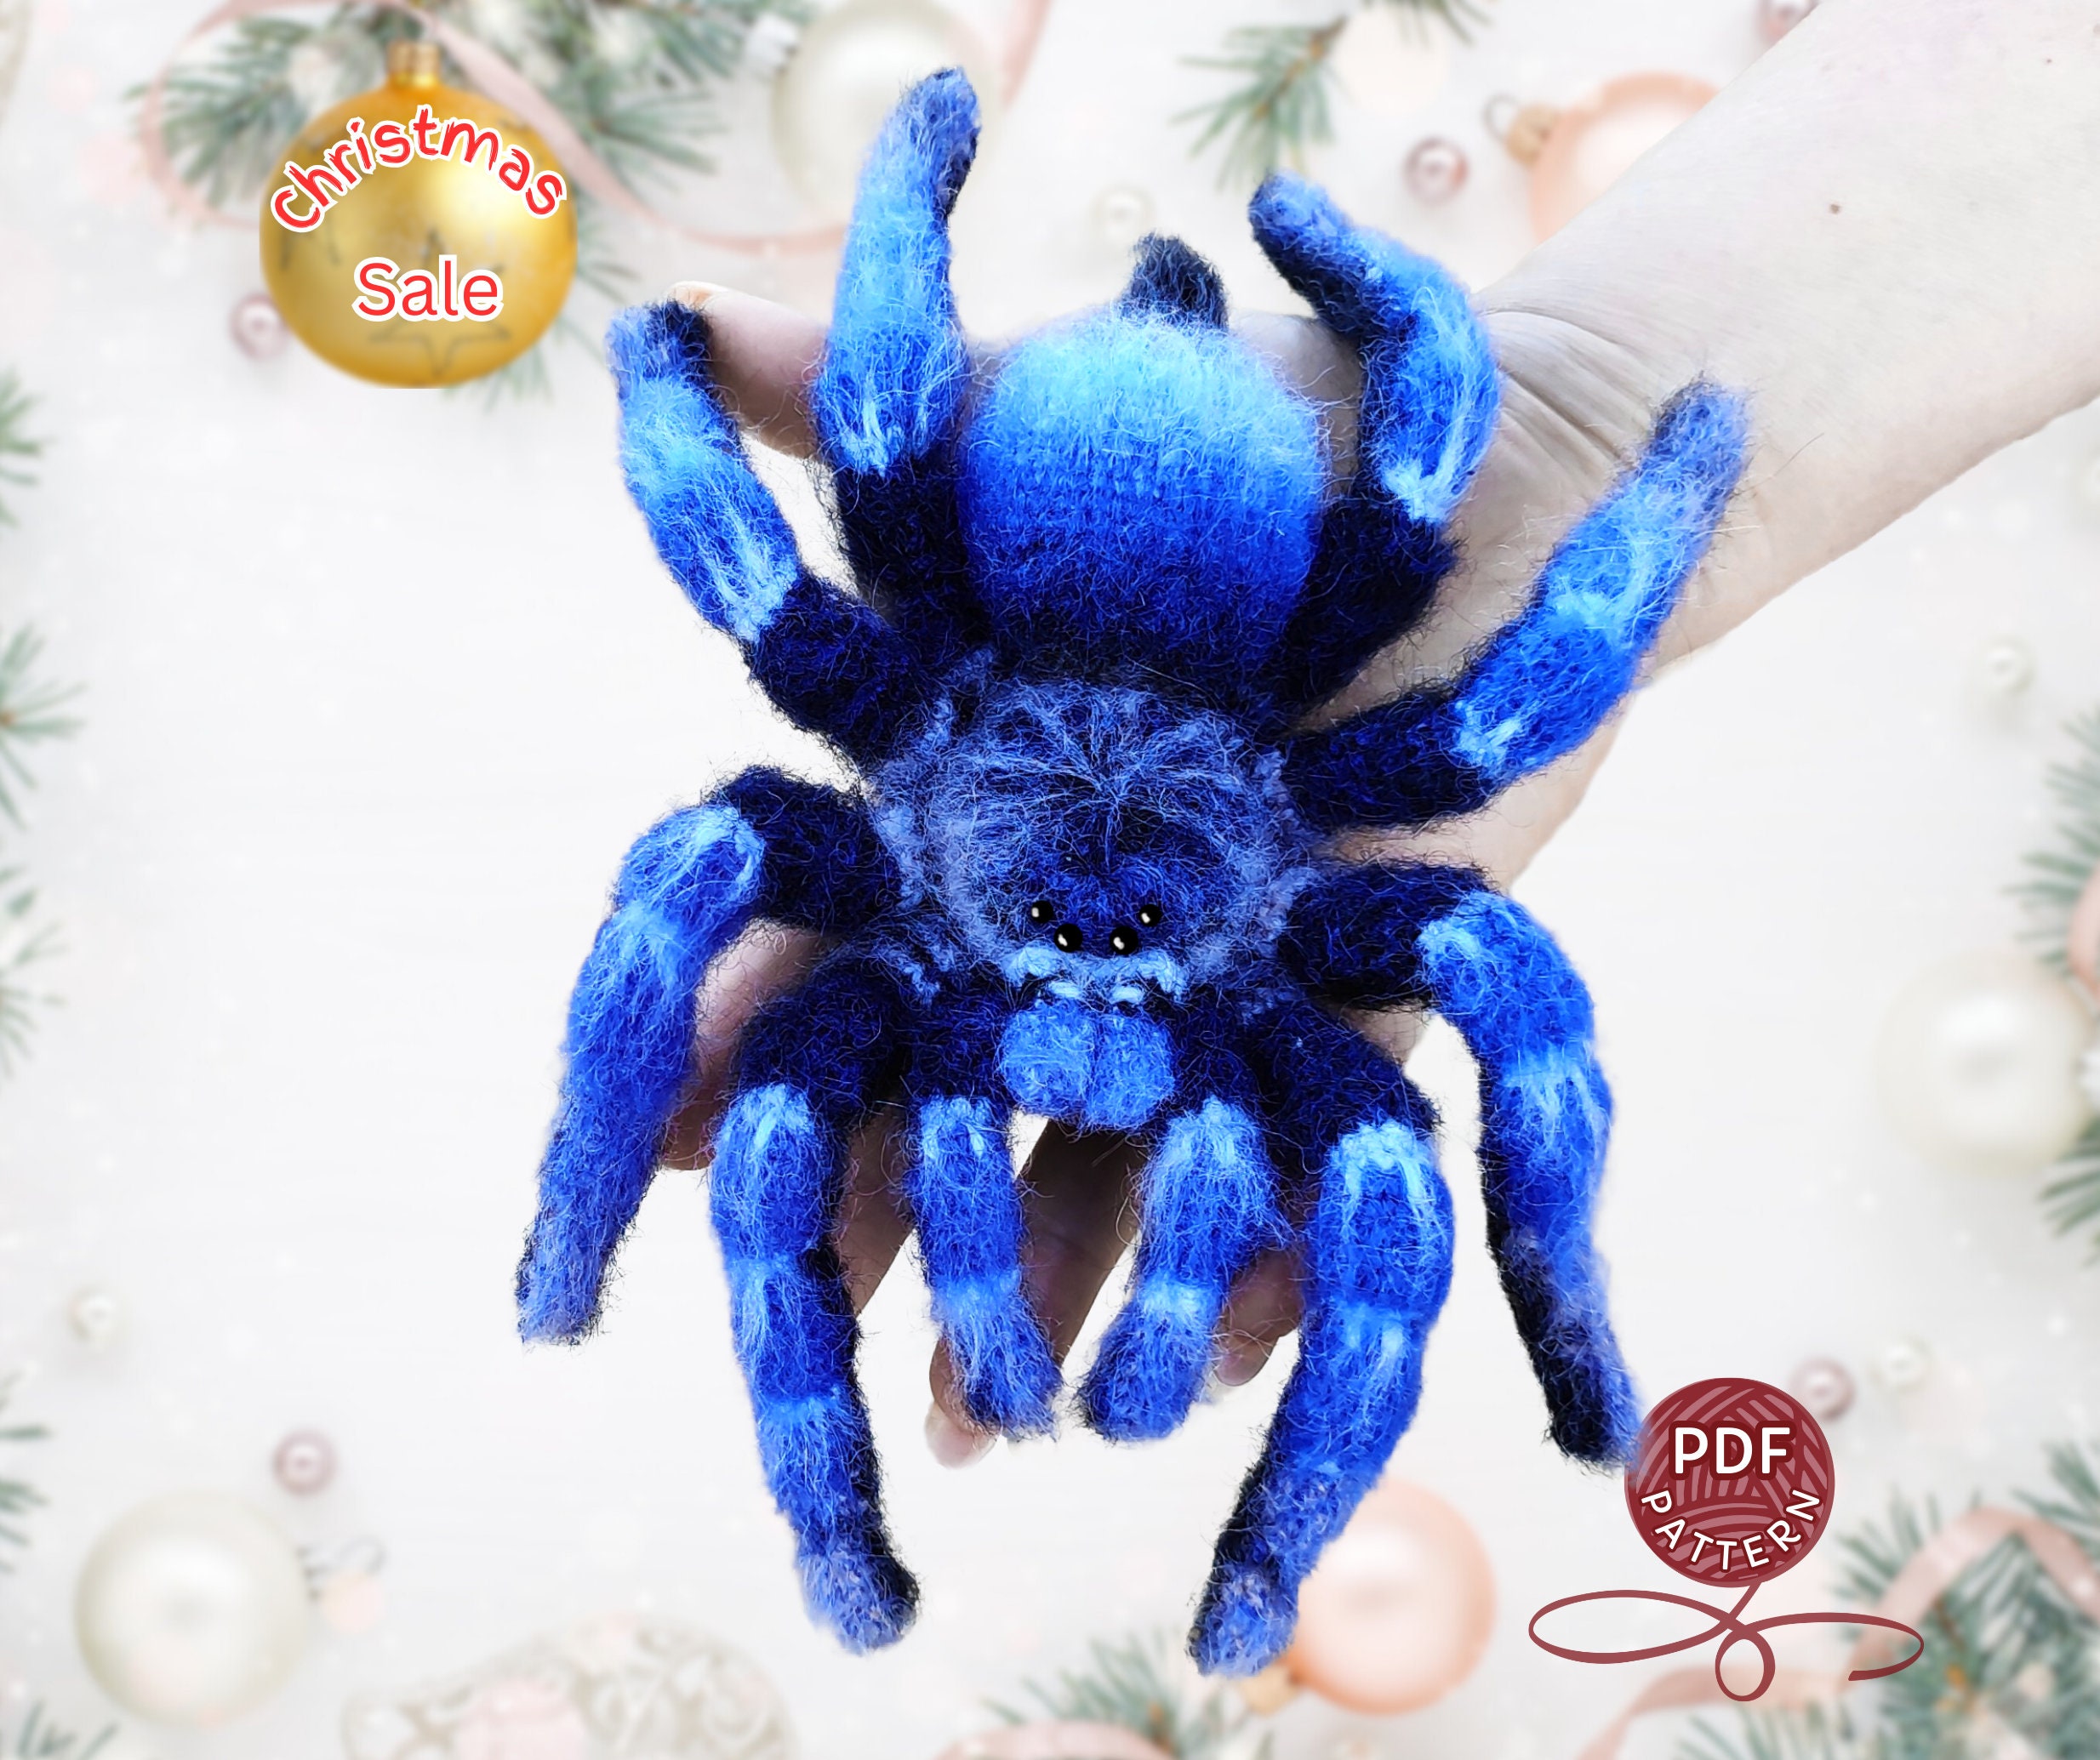 Emotional Support Tarantula Spider Arachnid Plush Stuffed Animal